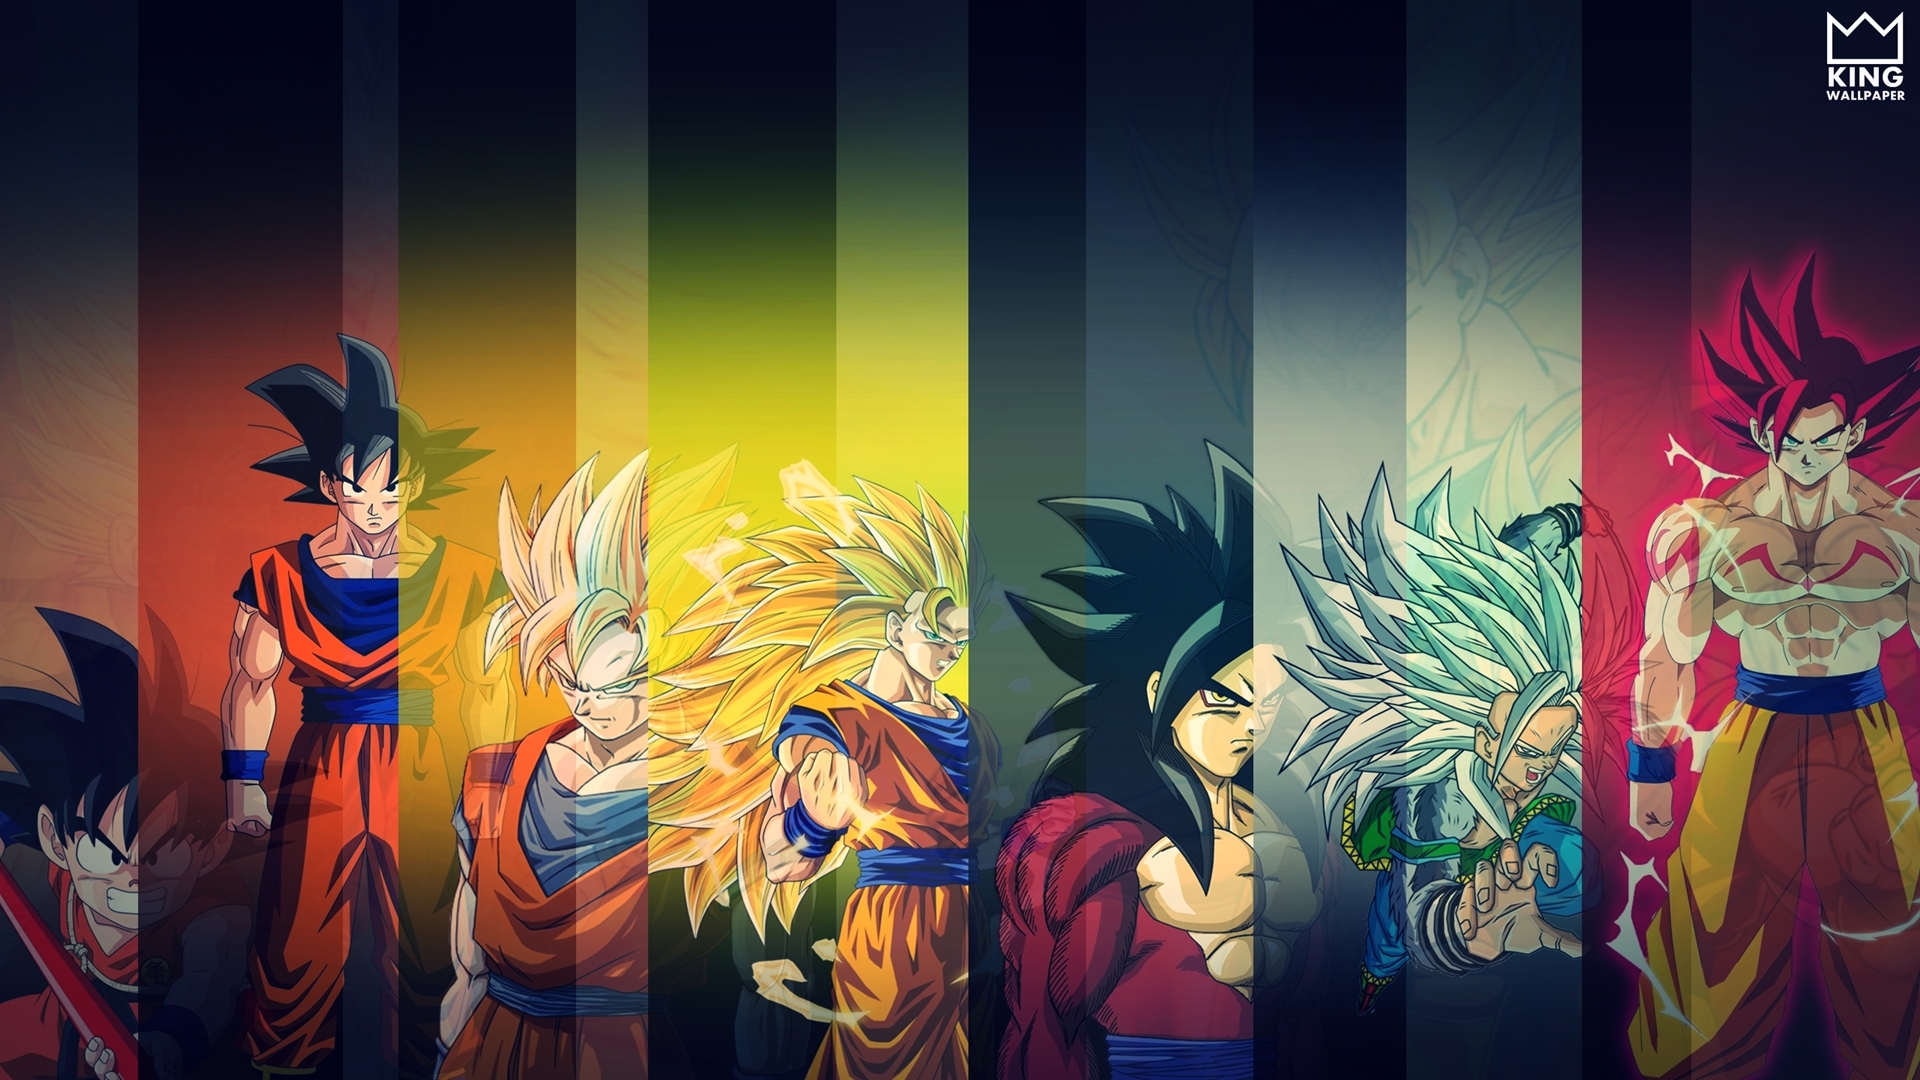 Cool Wallpaper of Goku